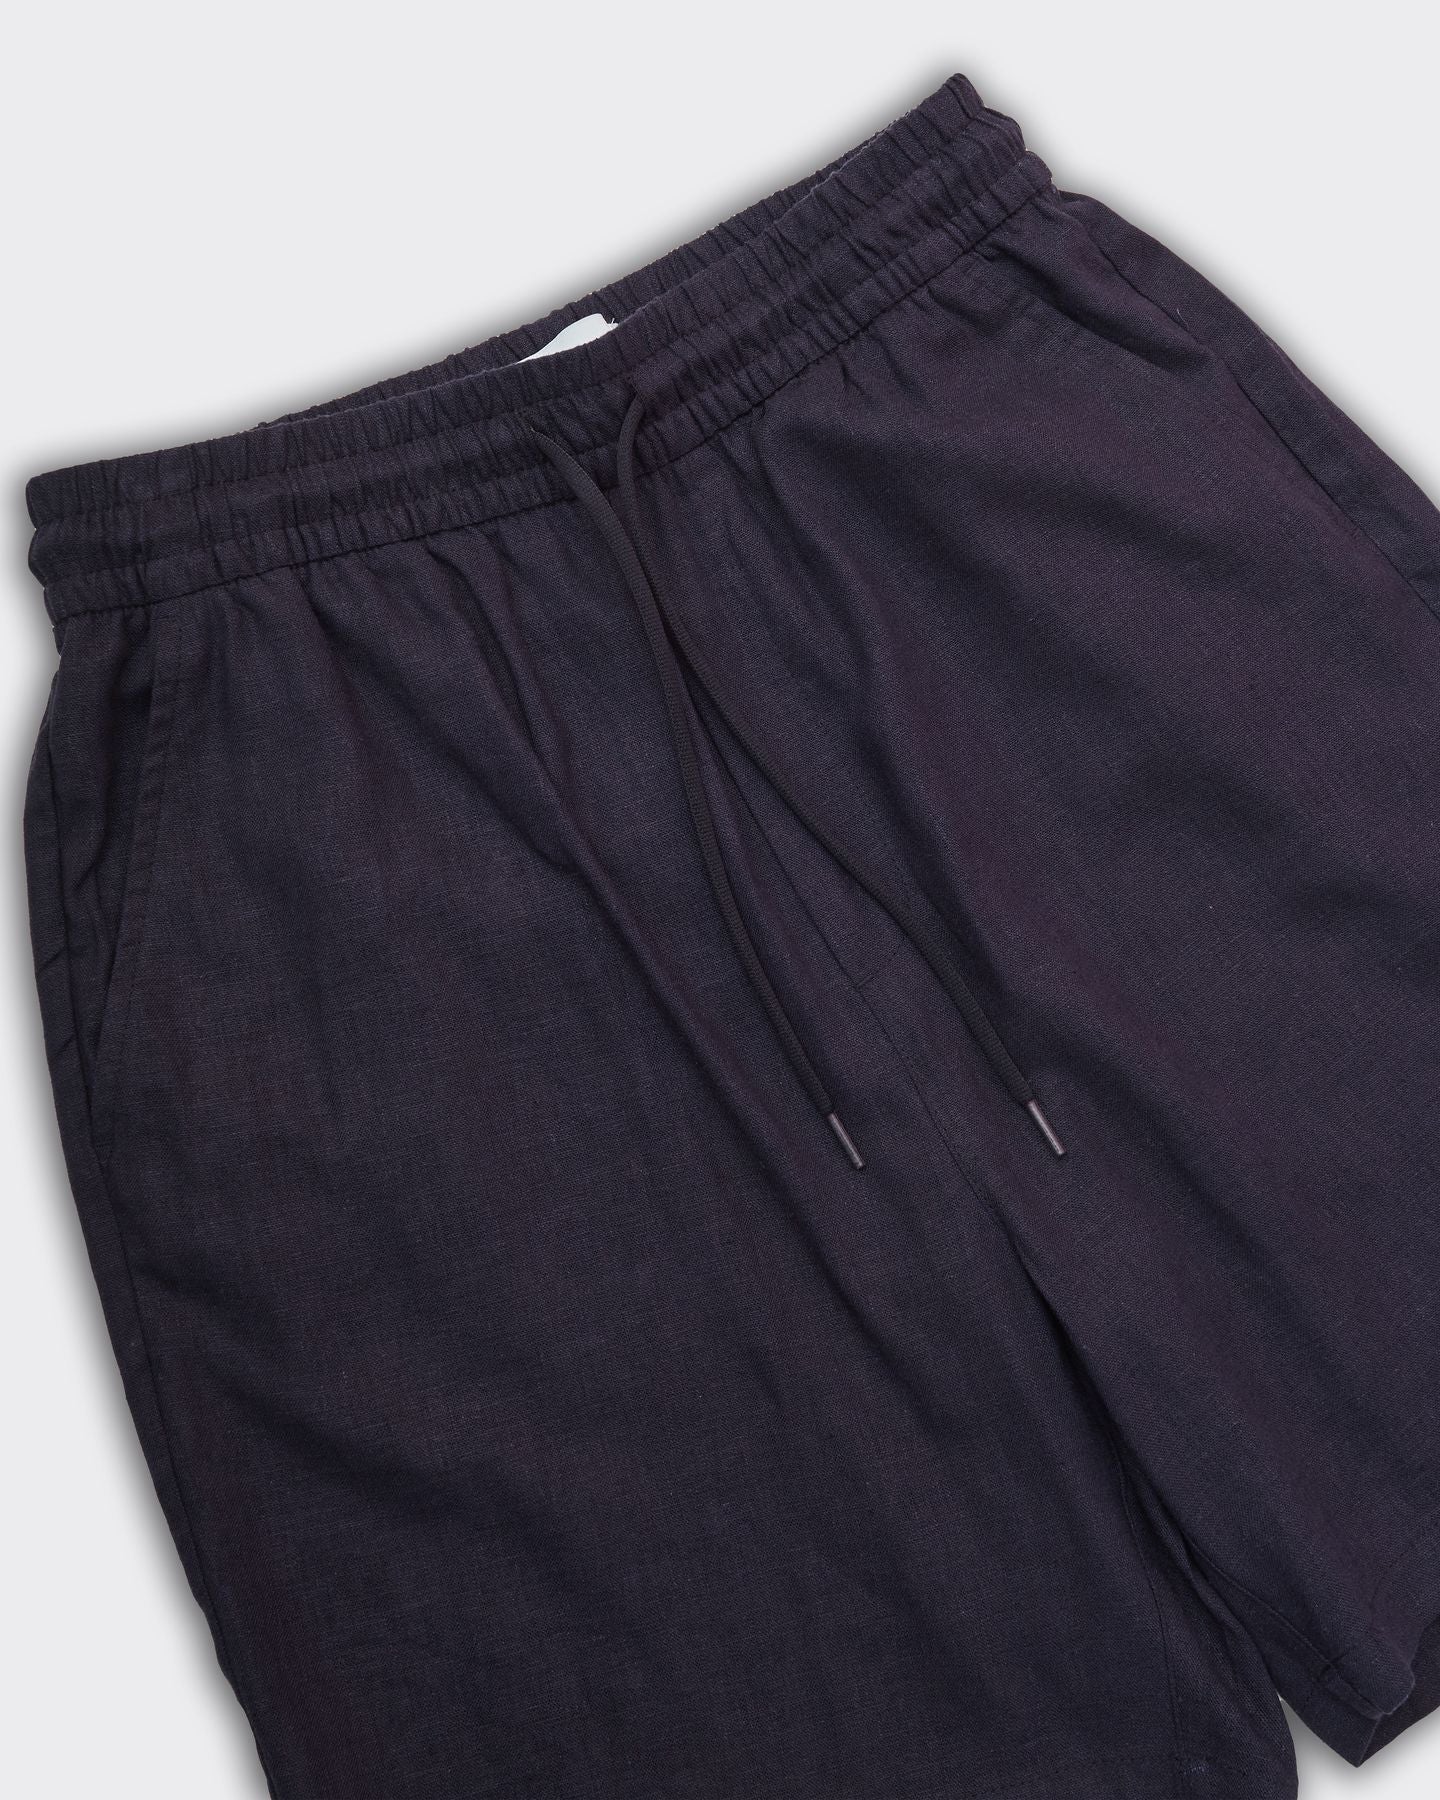 Linen Otto Dark Navy Shorts